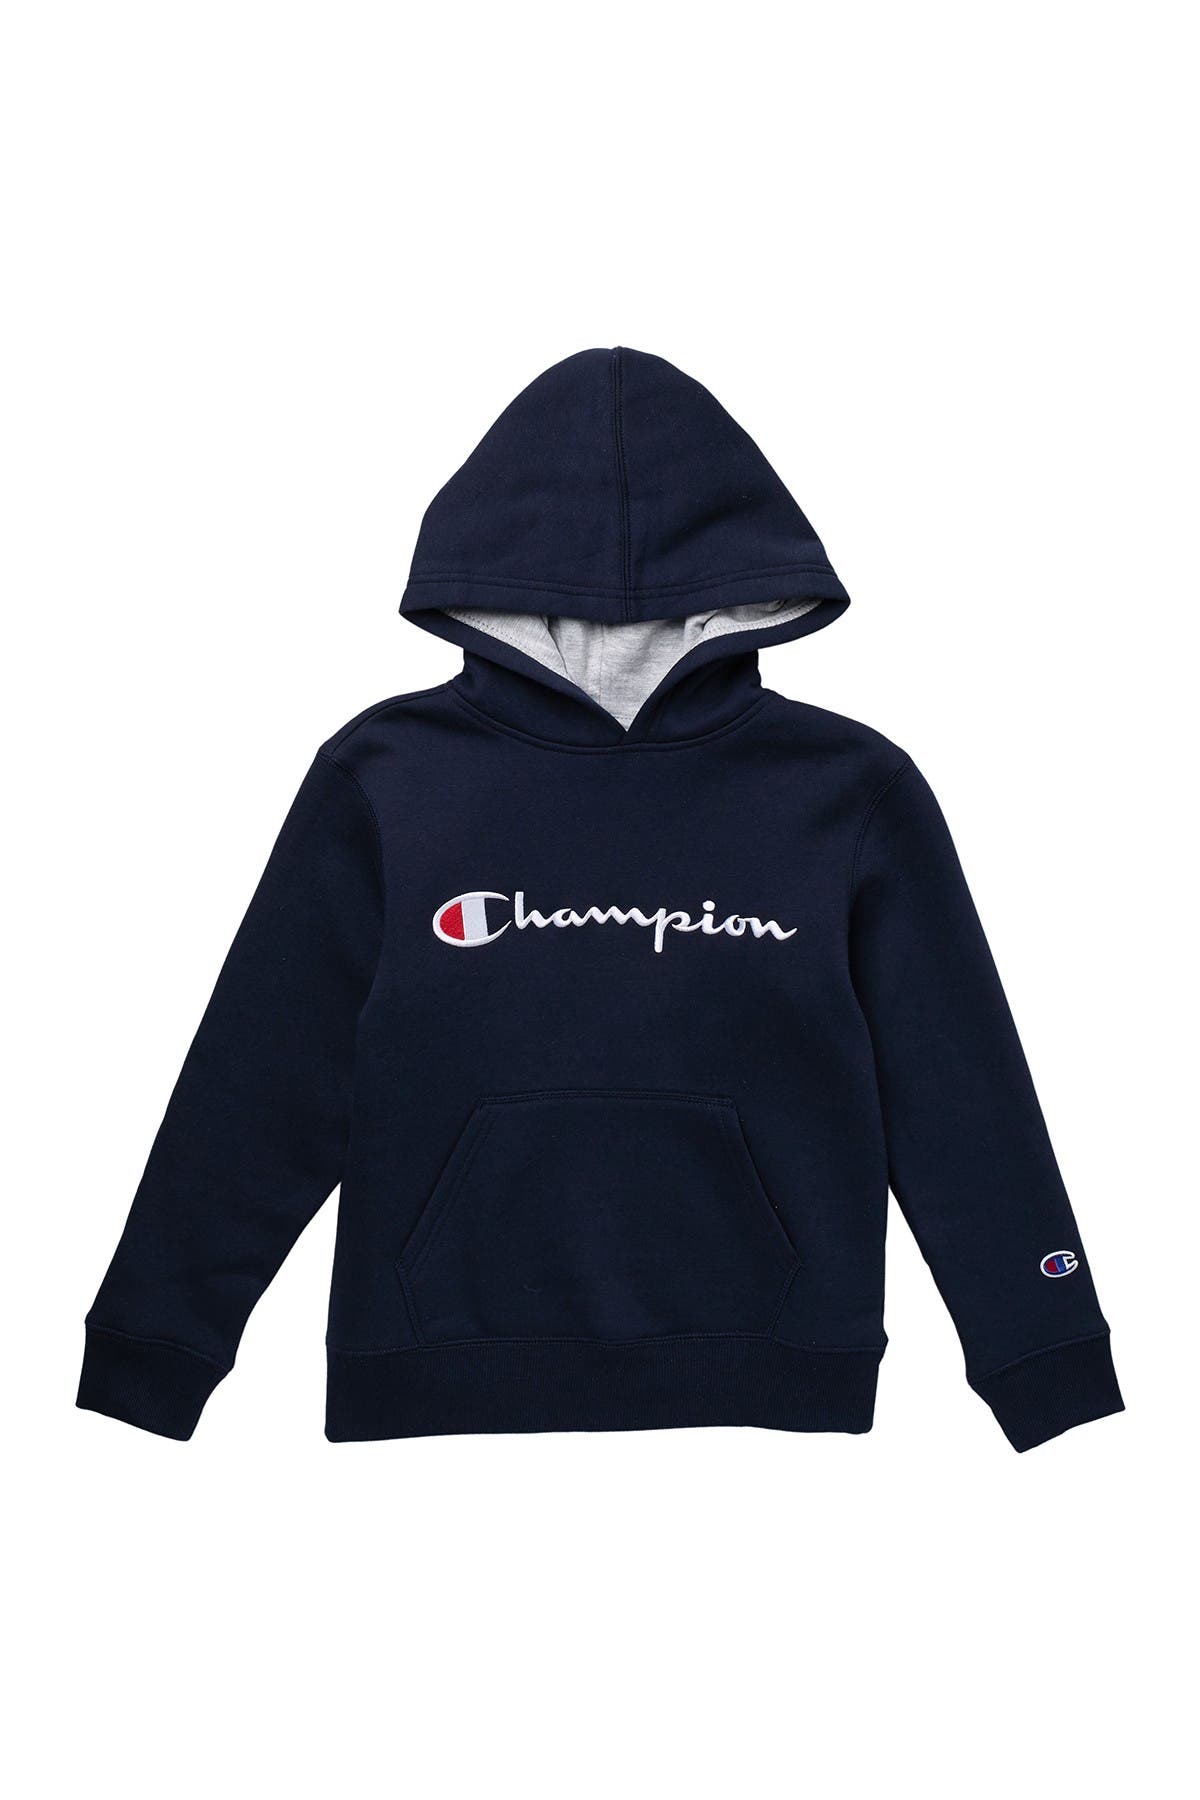 champion jacket kids price